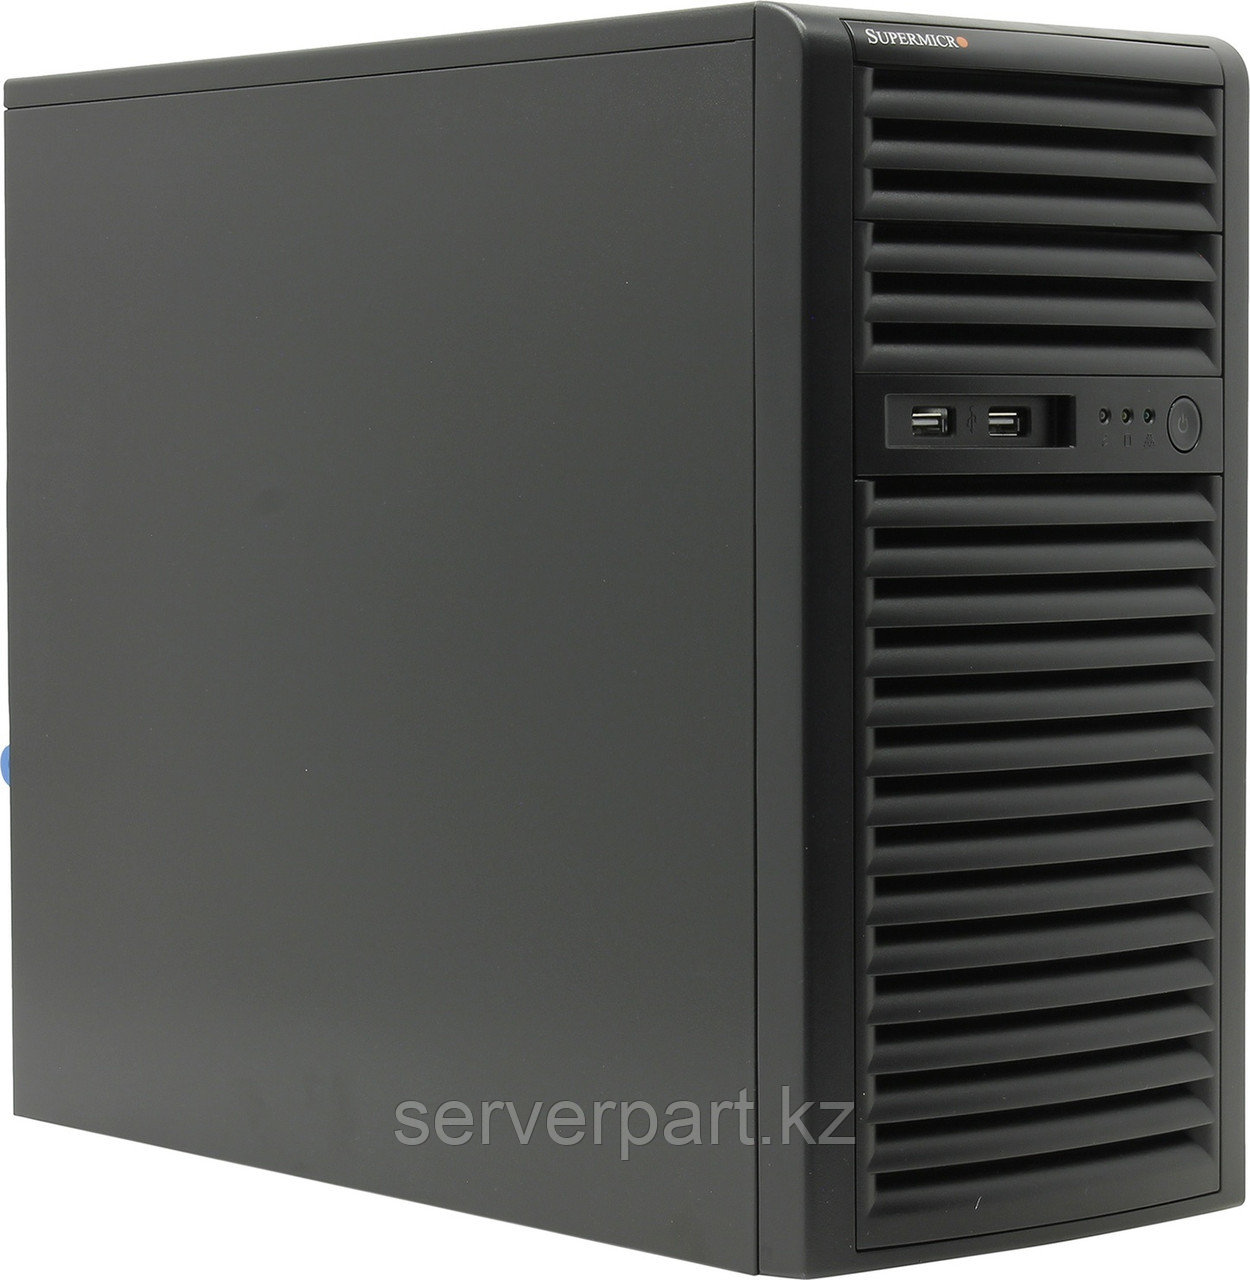 Сервер Supermicro 5039D Tower/4-core intel xeon E3-1220v6 3GHz/32GB UDIMM nECC/1x480GB SSD RI Hyb, фото 1